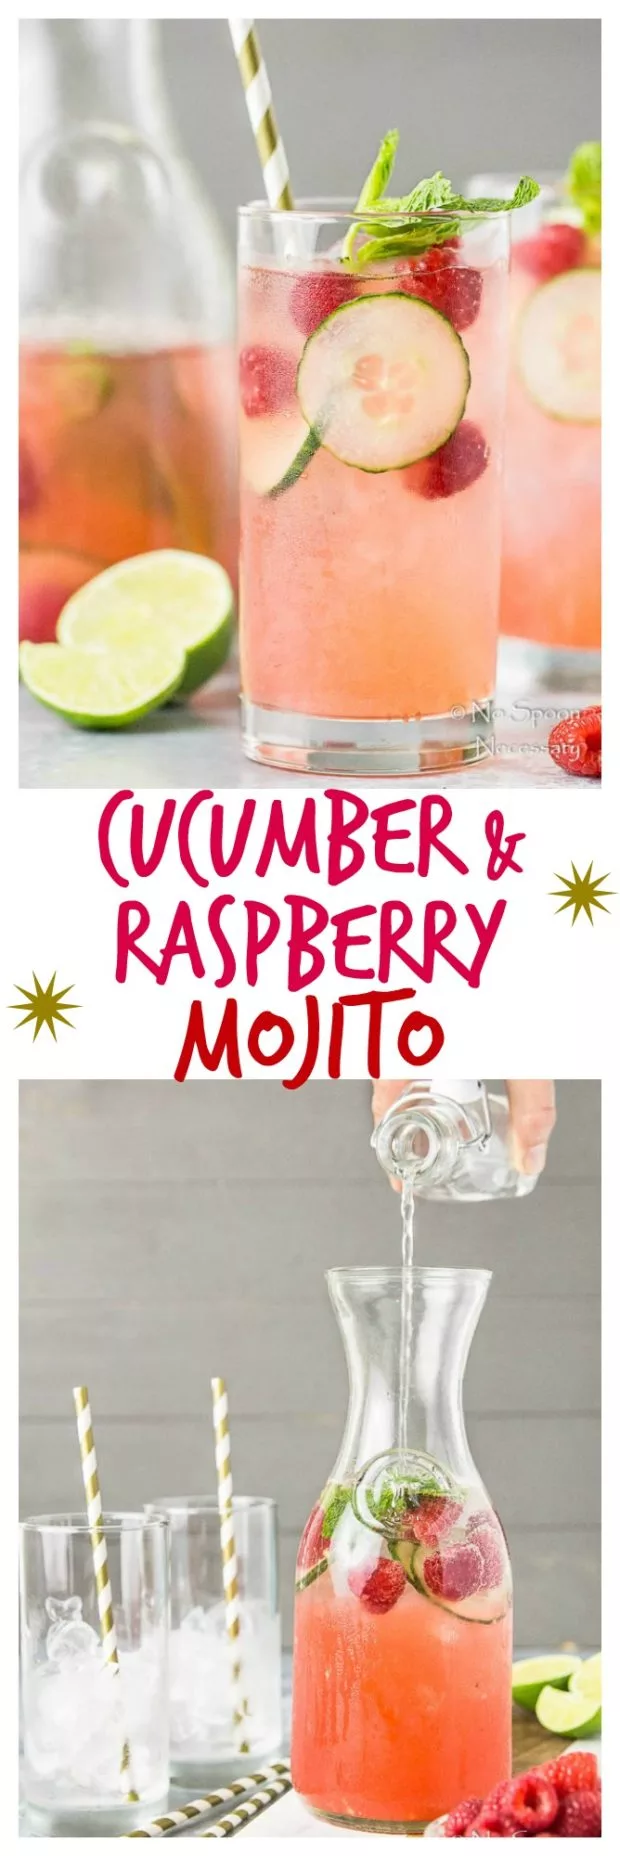 Cucumber & Raspberry Mojito-long pin1